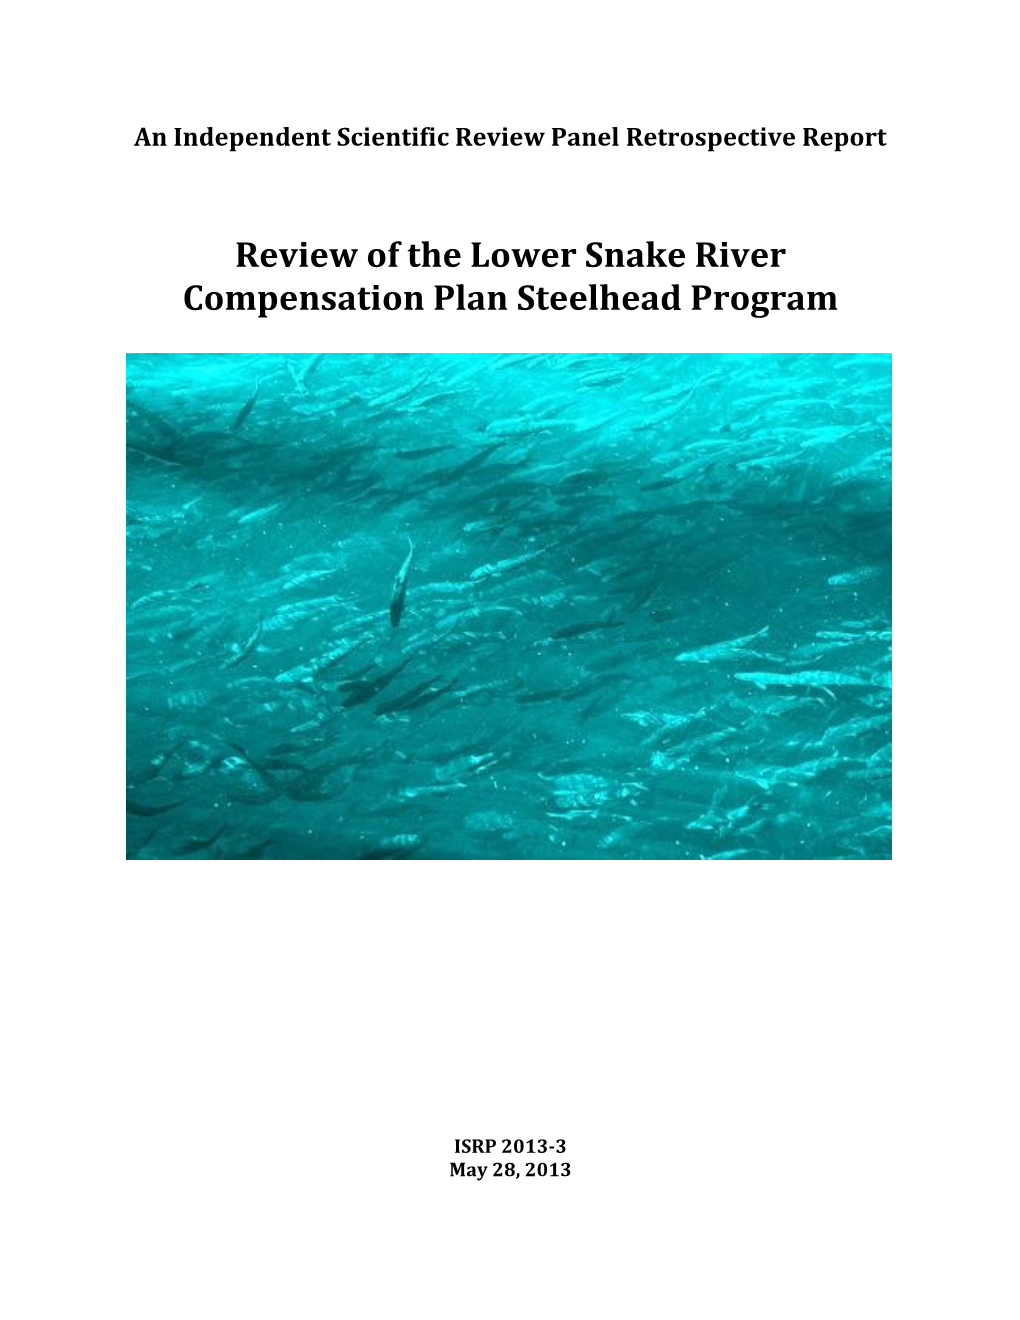 Review of the Lower Snake River Compensation Plan Steelhead Program